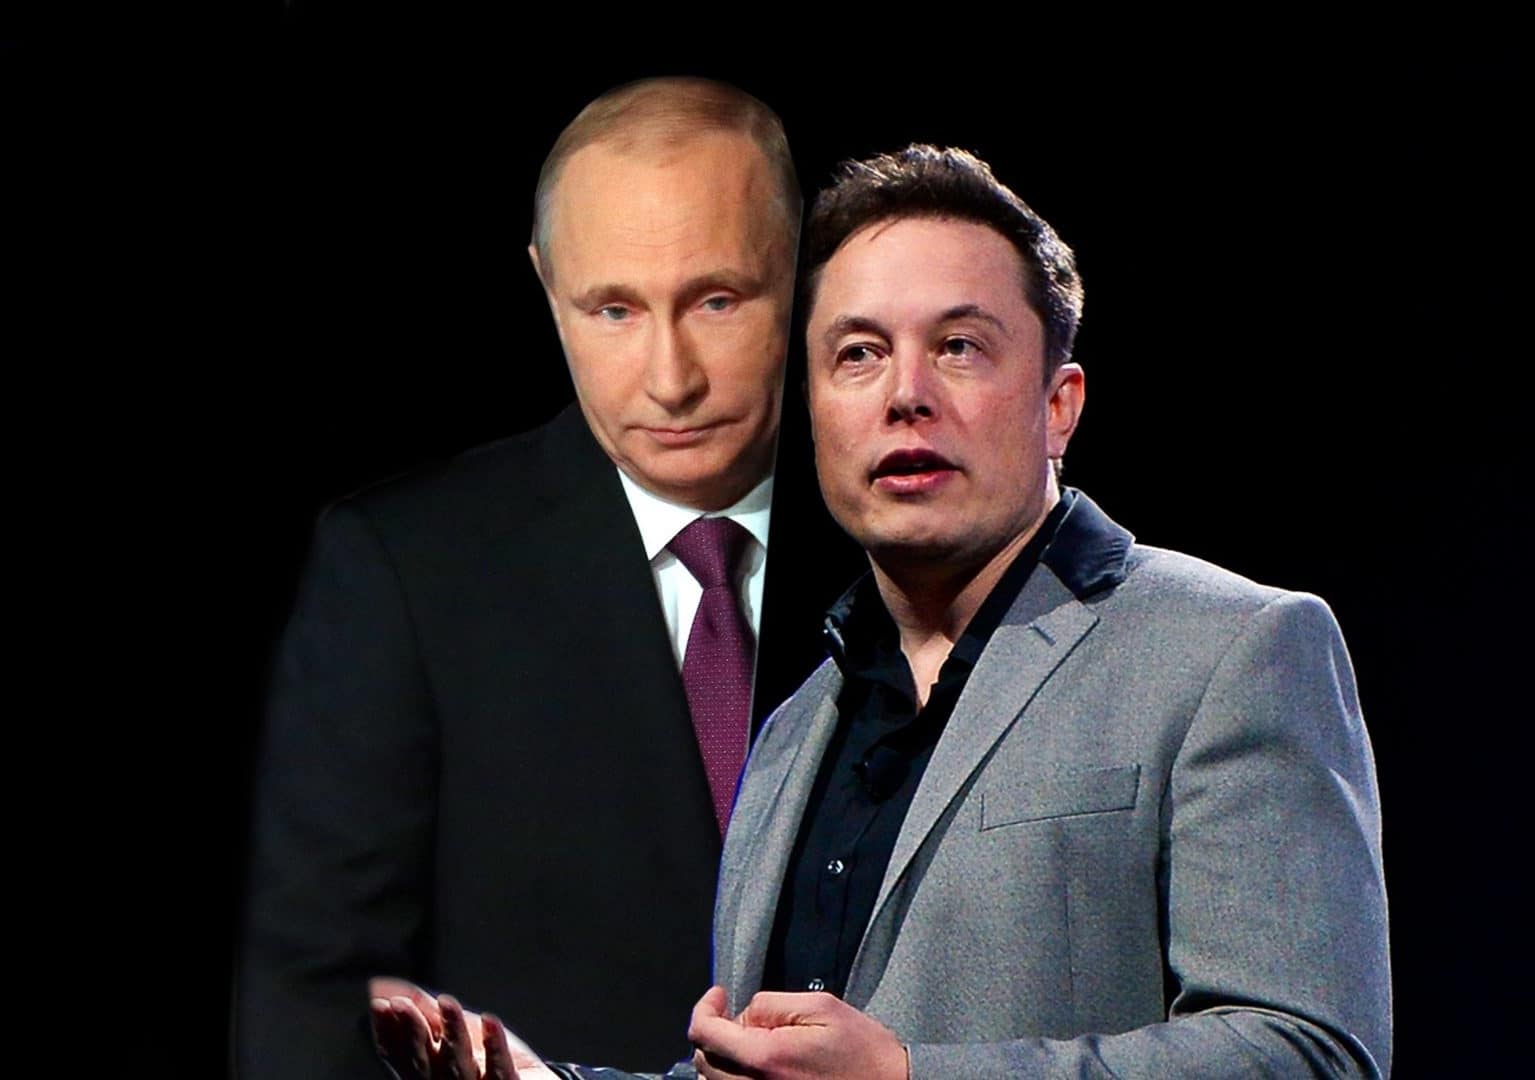 Elon Musk Speaking to Putin Worries Washington Neocons